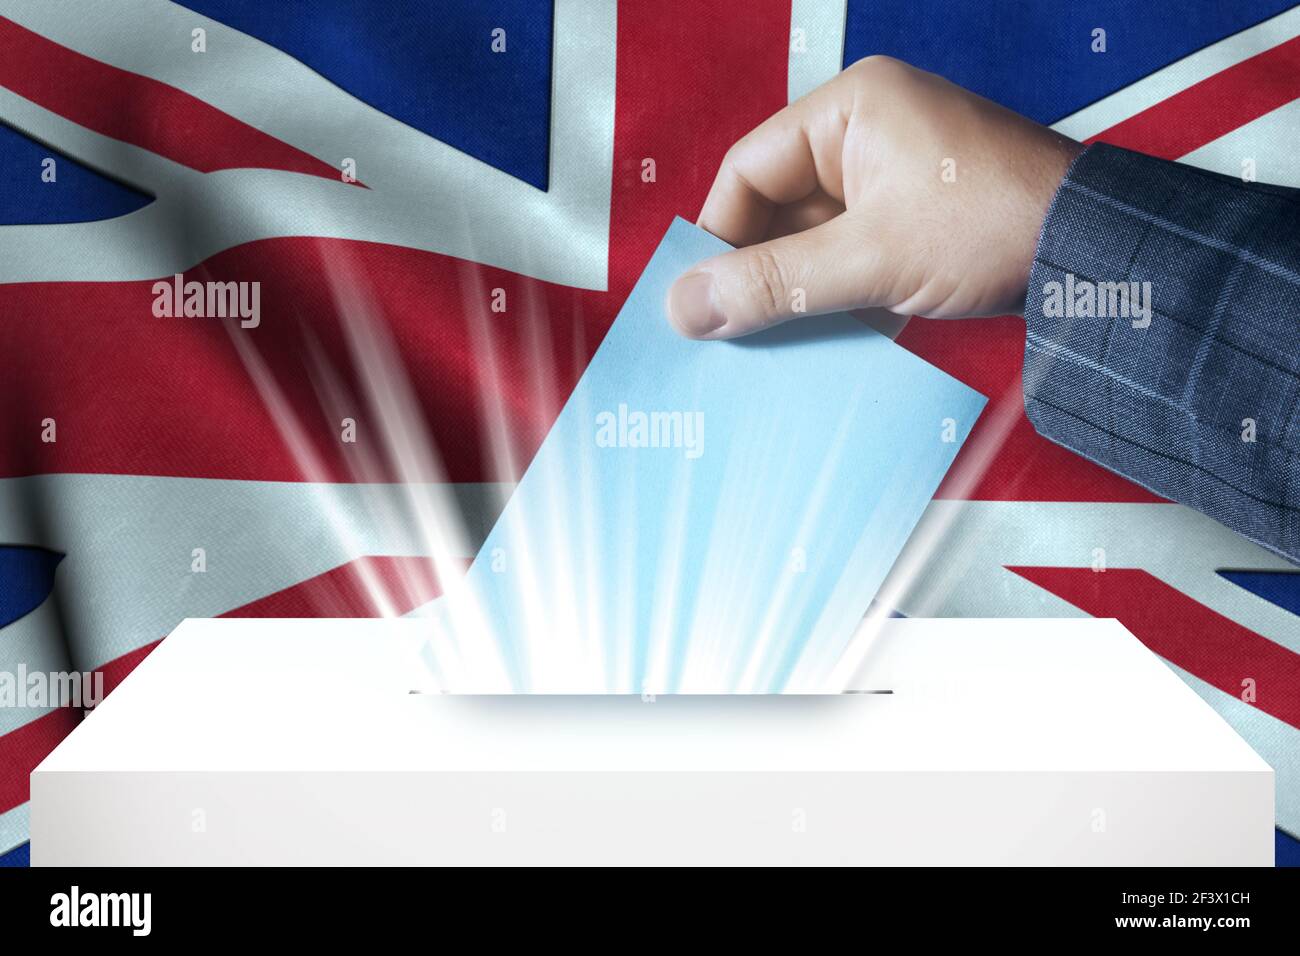 United Kingdom - Voting On Ballot Box With National Flag Background Stock Photo